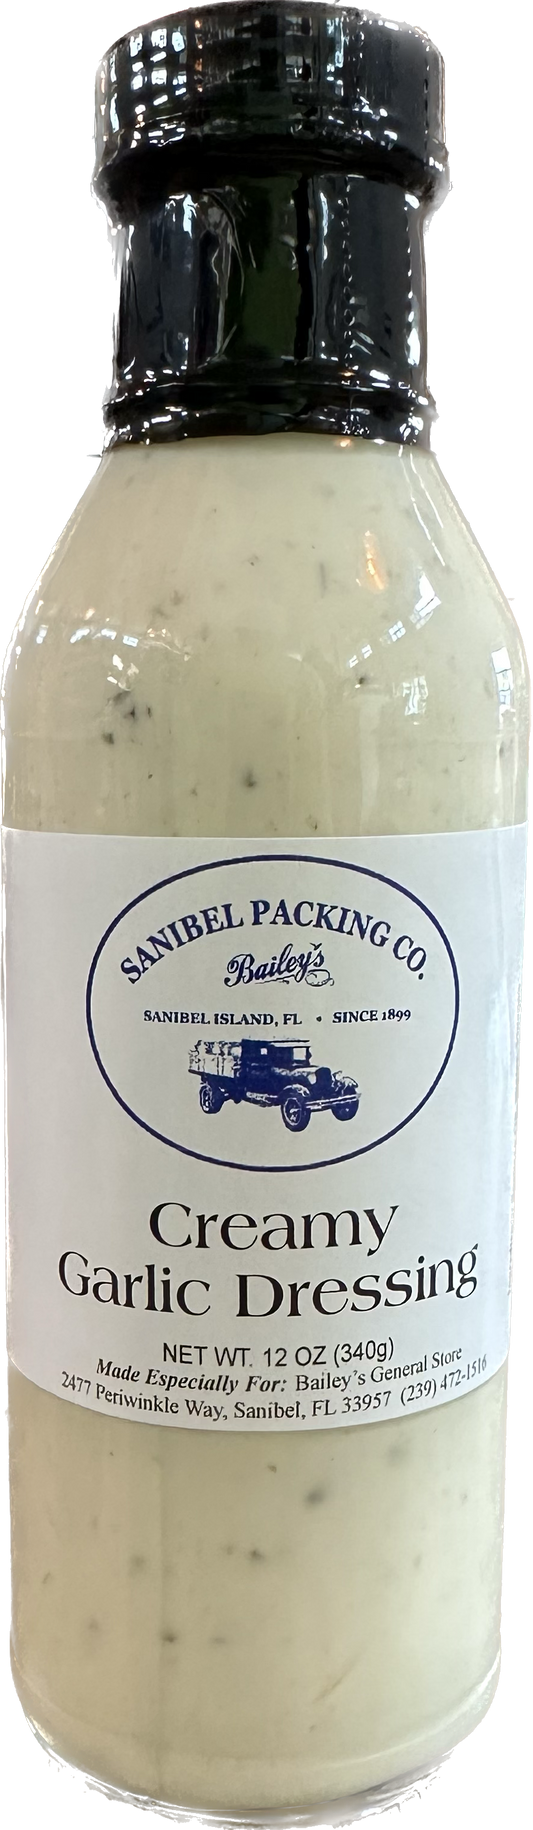 Creamy Garlic Dressing by Sanibel Packing Company